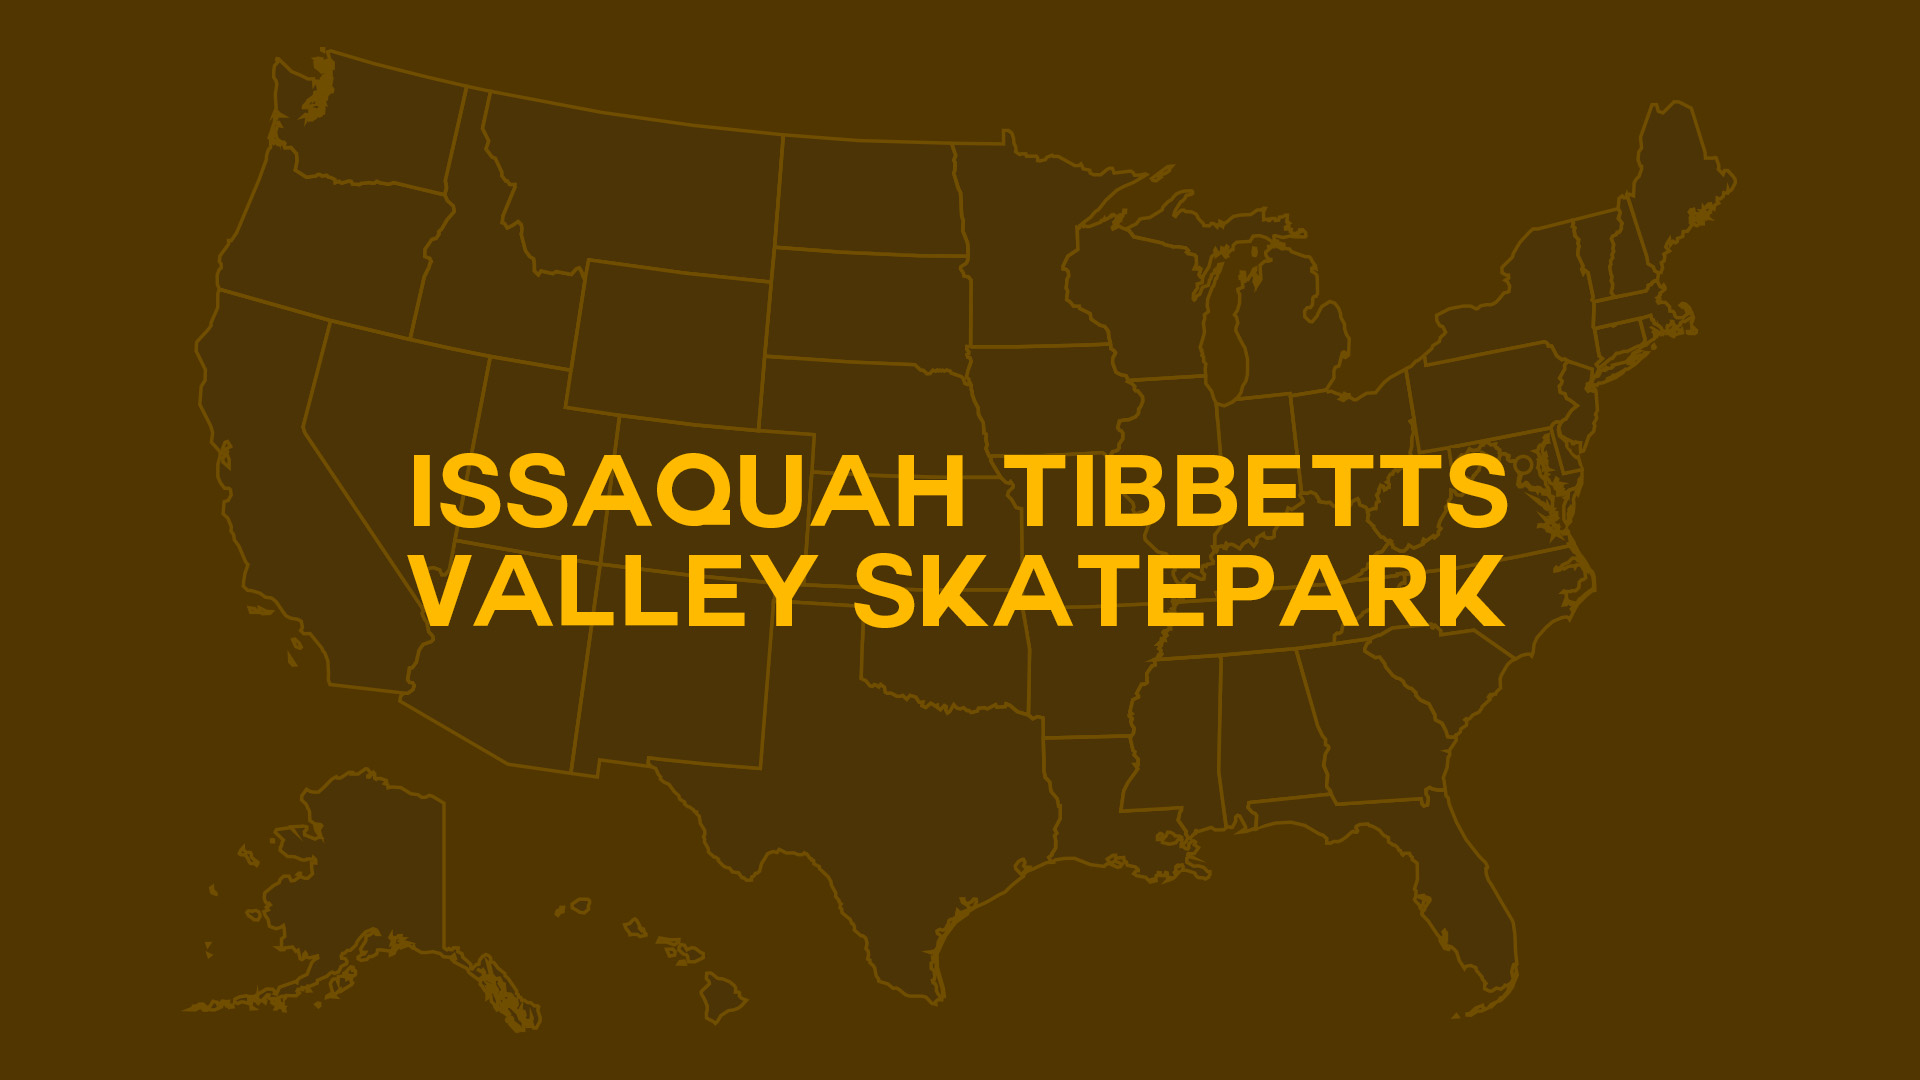 Title card for Issaquah Tibbetts Valley Skatepark